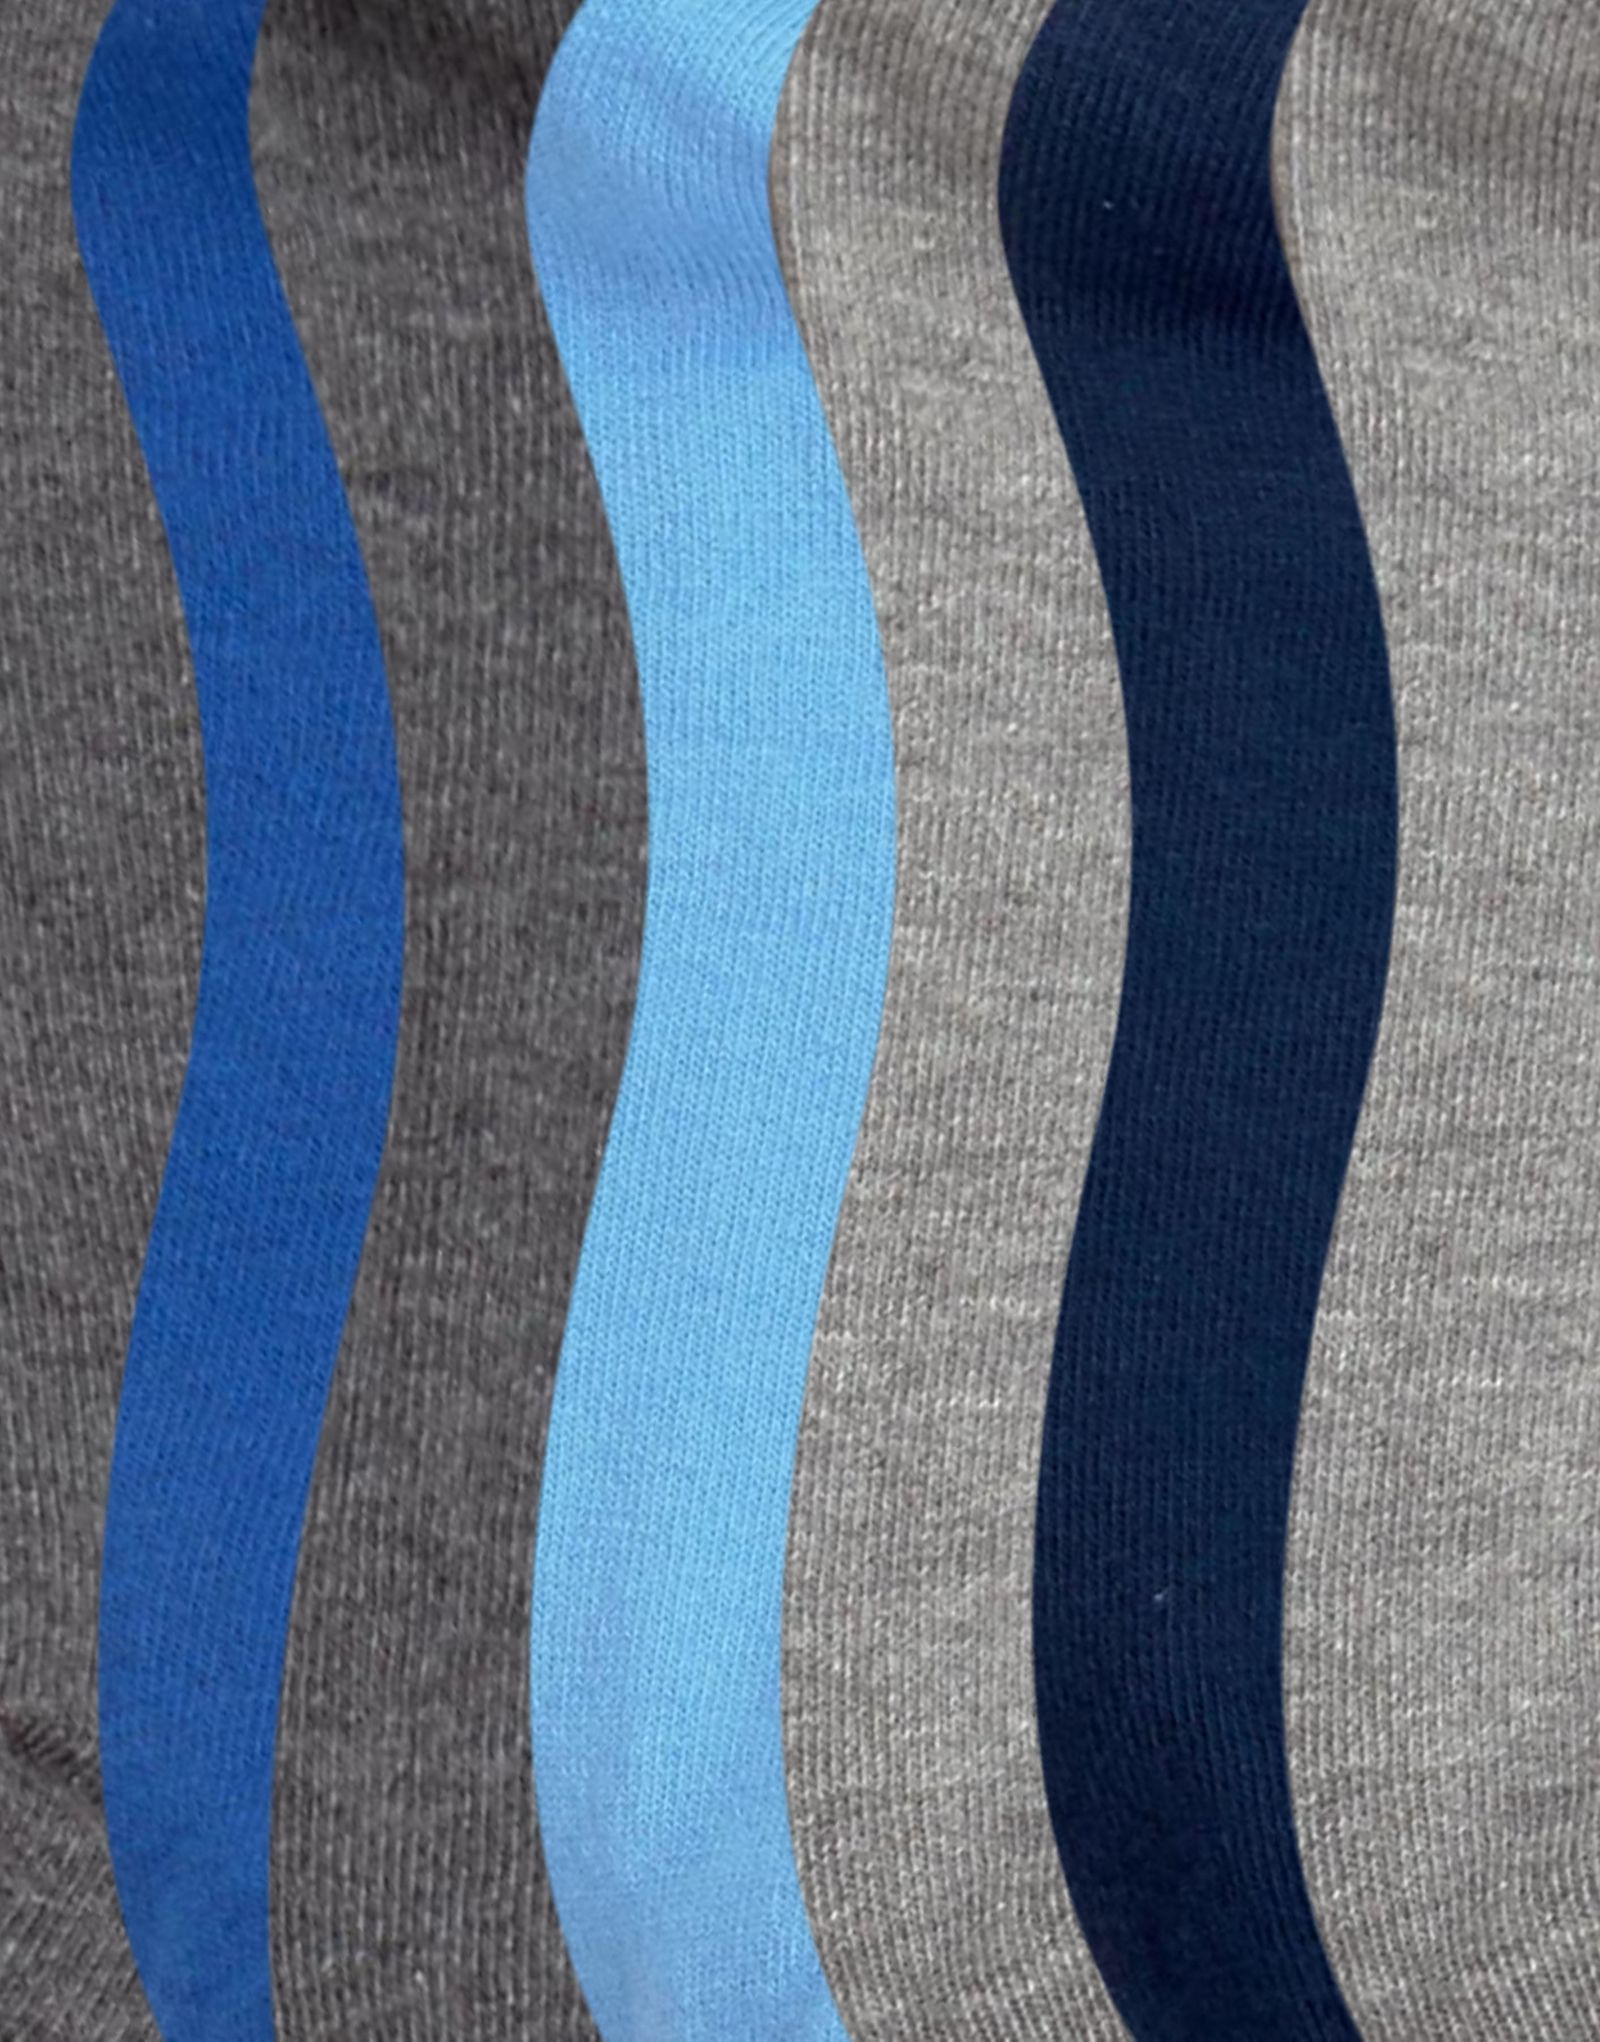 ASOS Trainer Socks In Blue & Grey 7 Pack